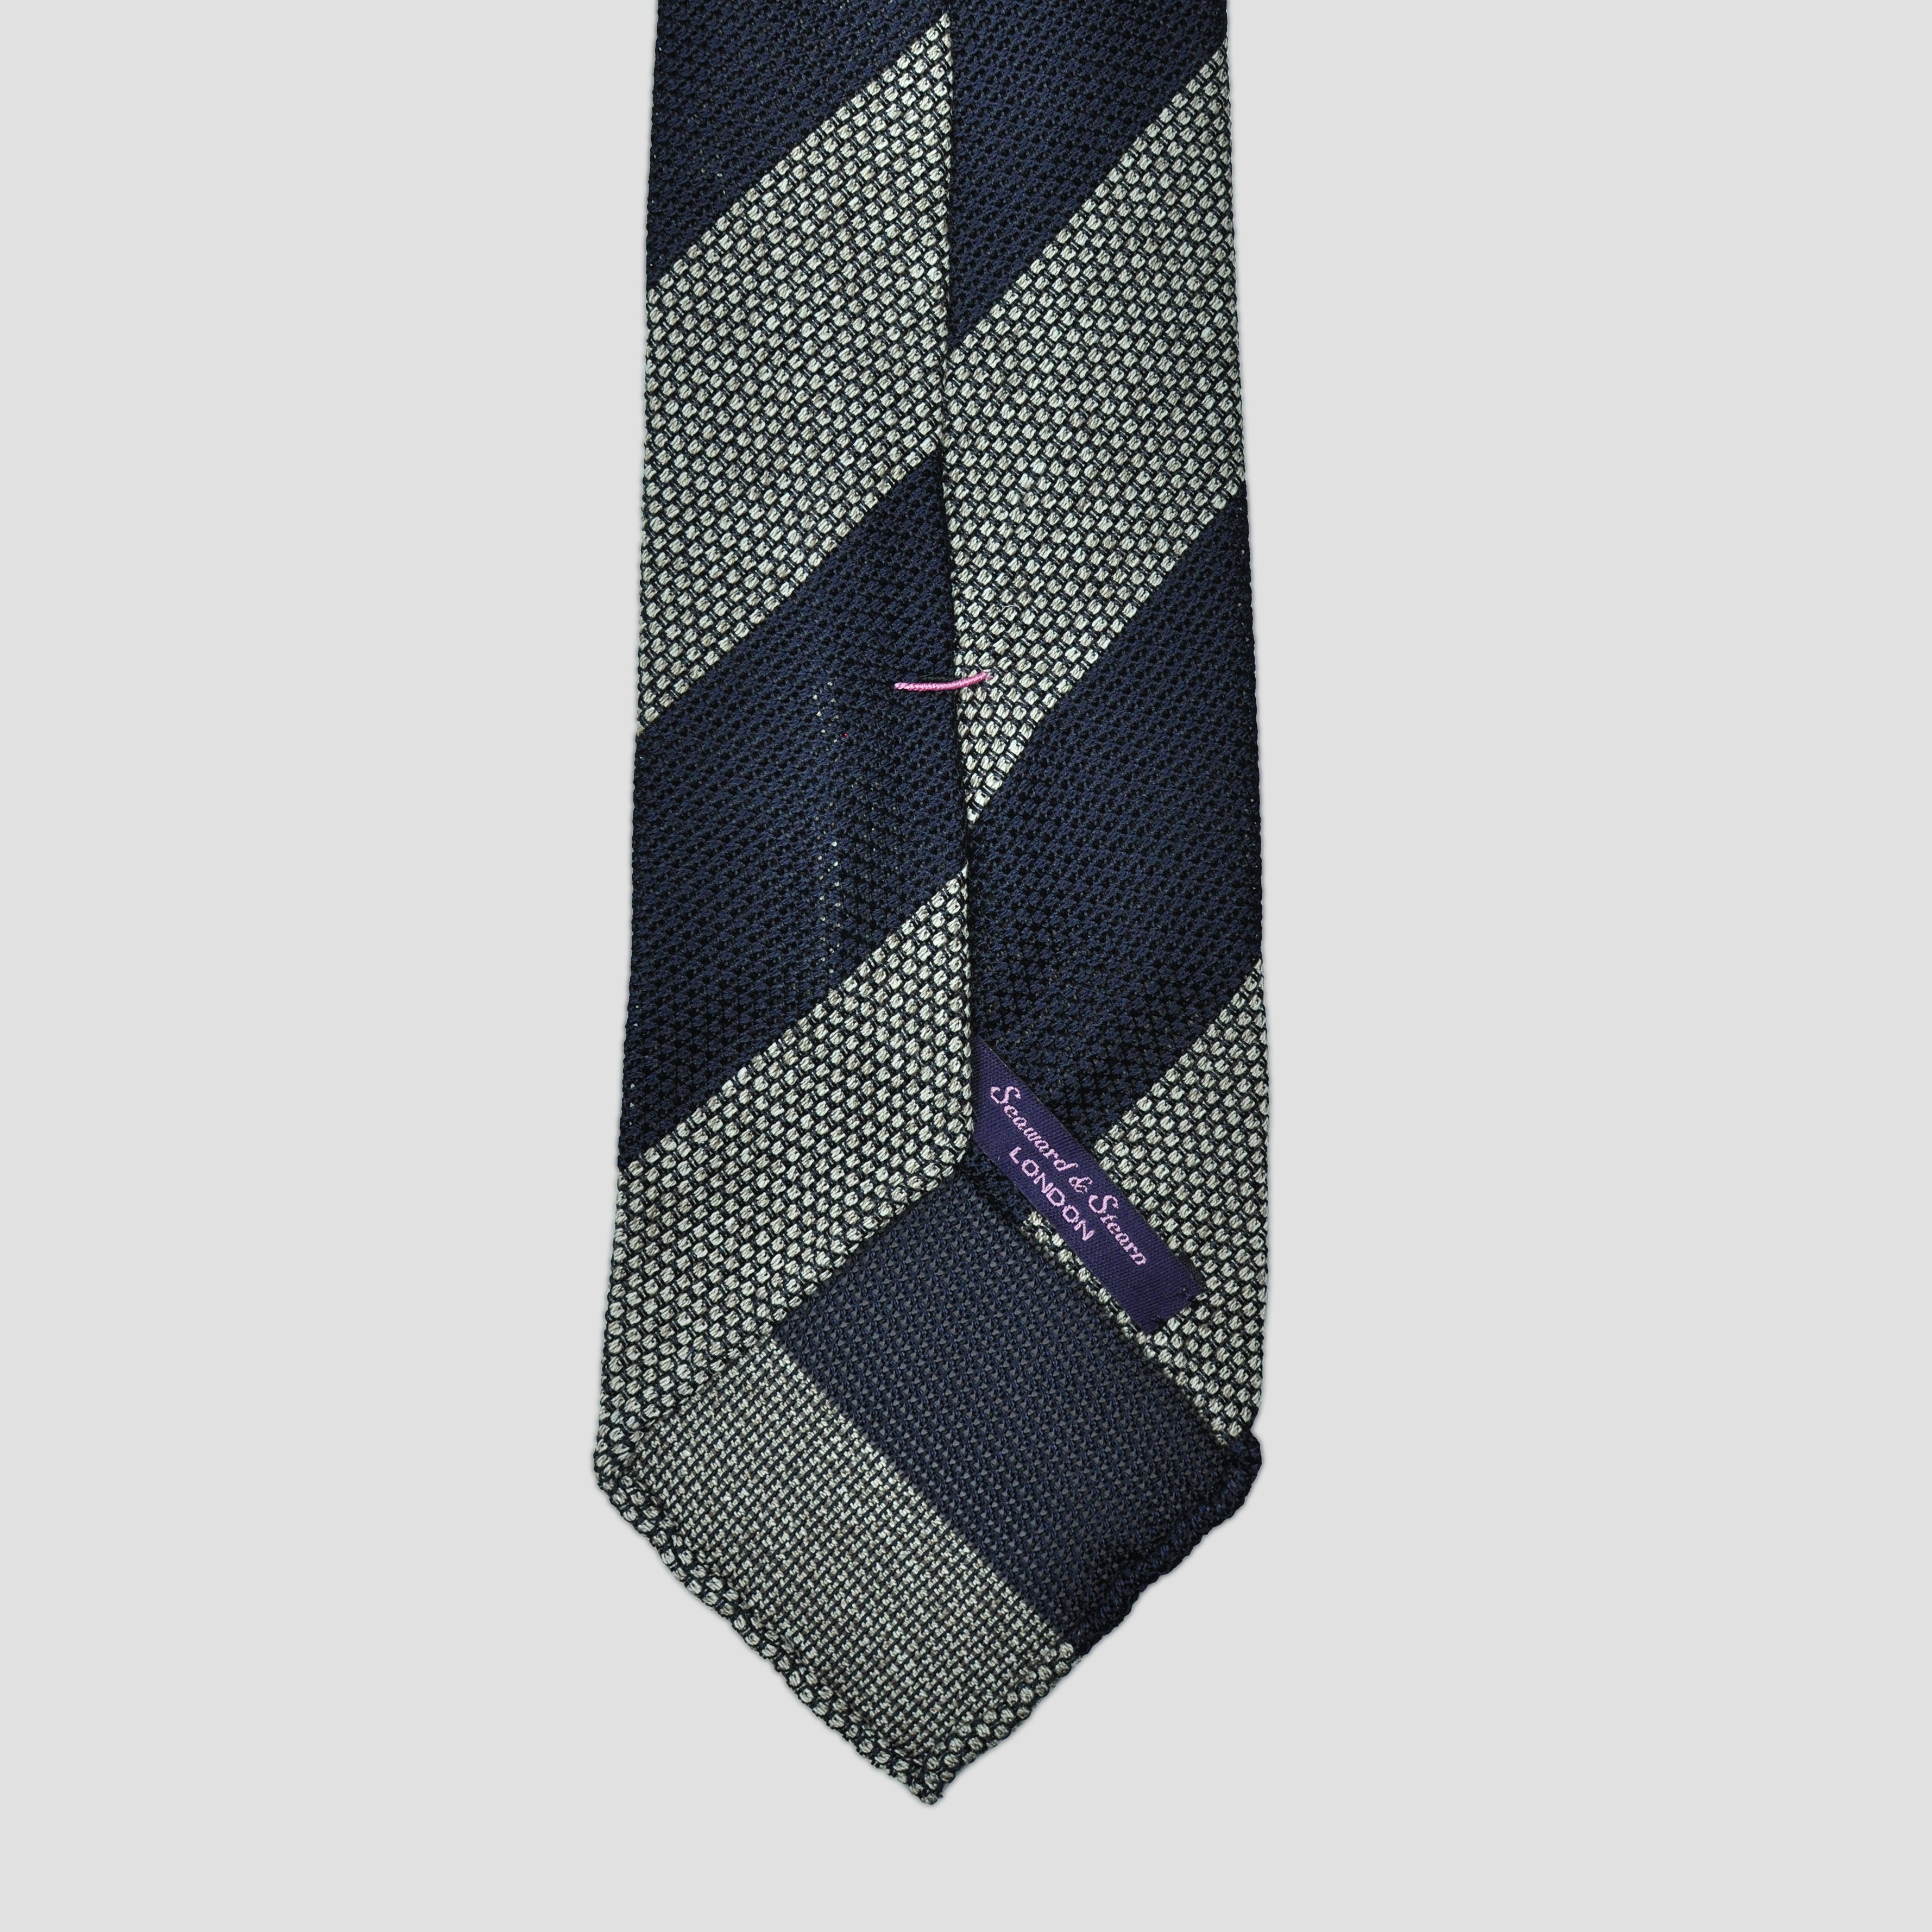 Handrolled Grenadine Silk Tie with Bold Navy & Grey Stripes